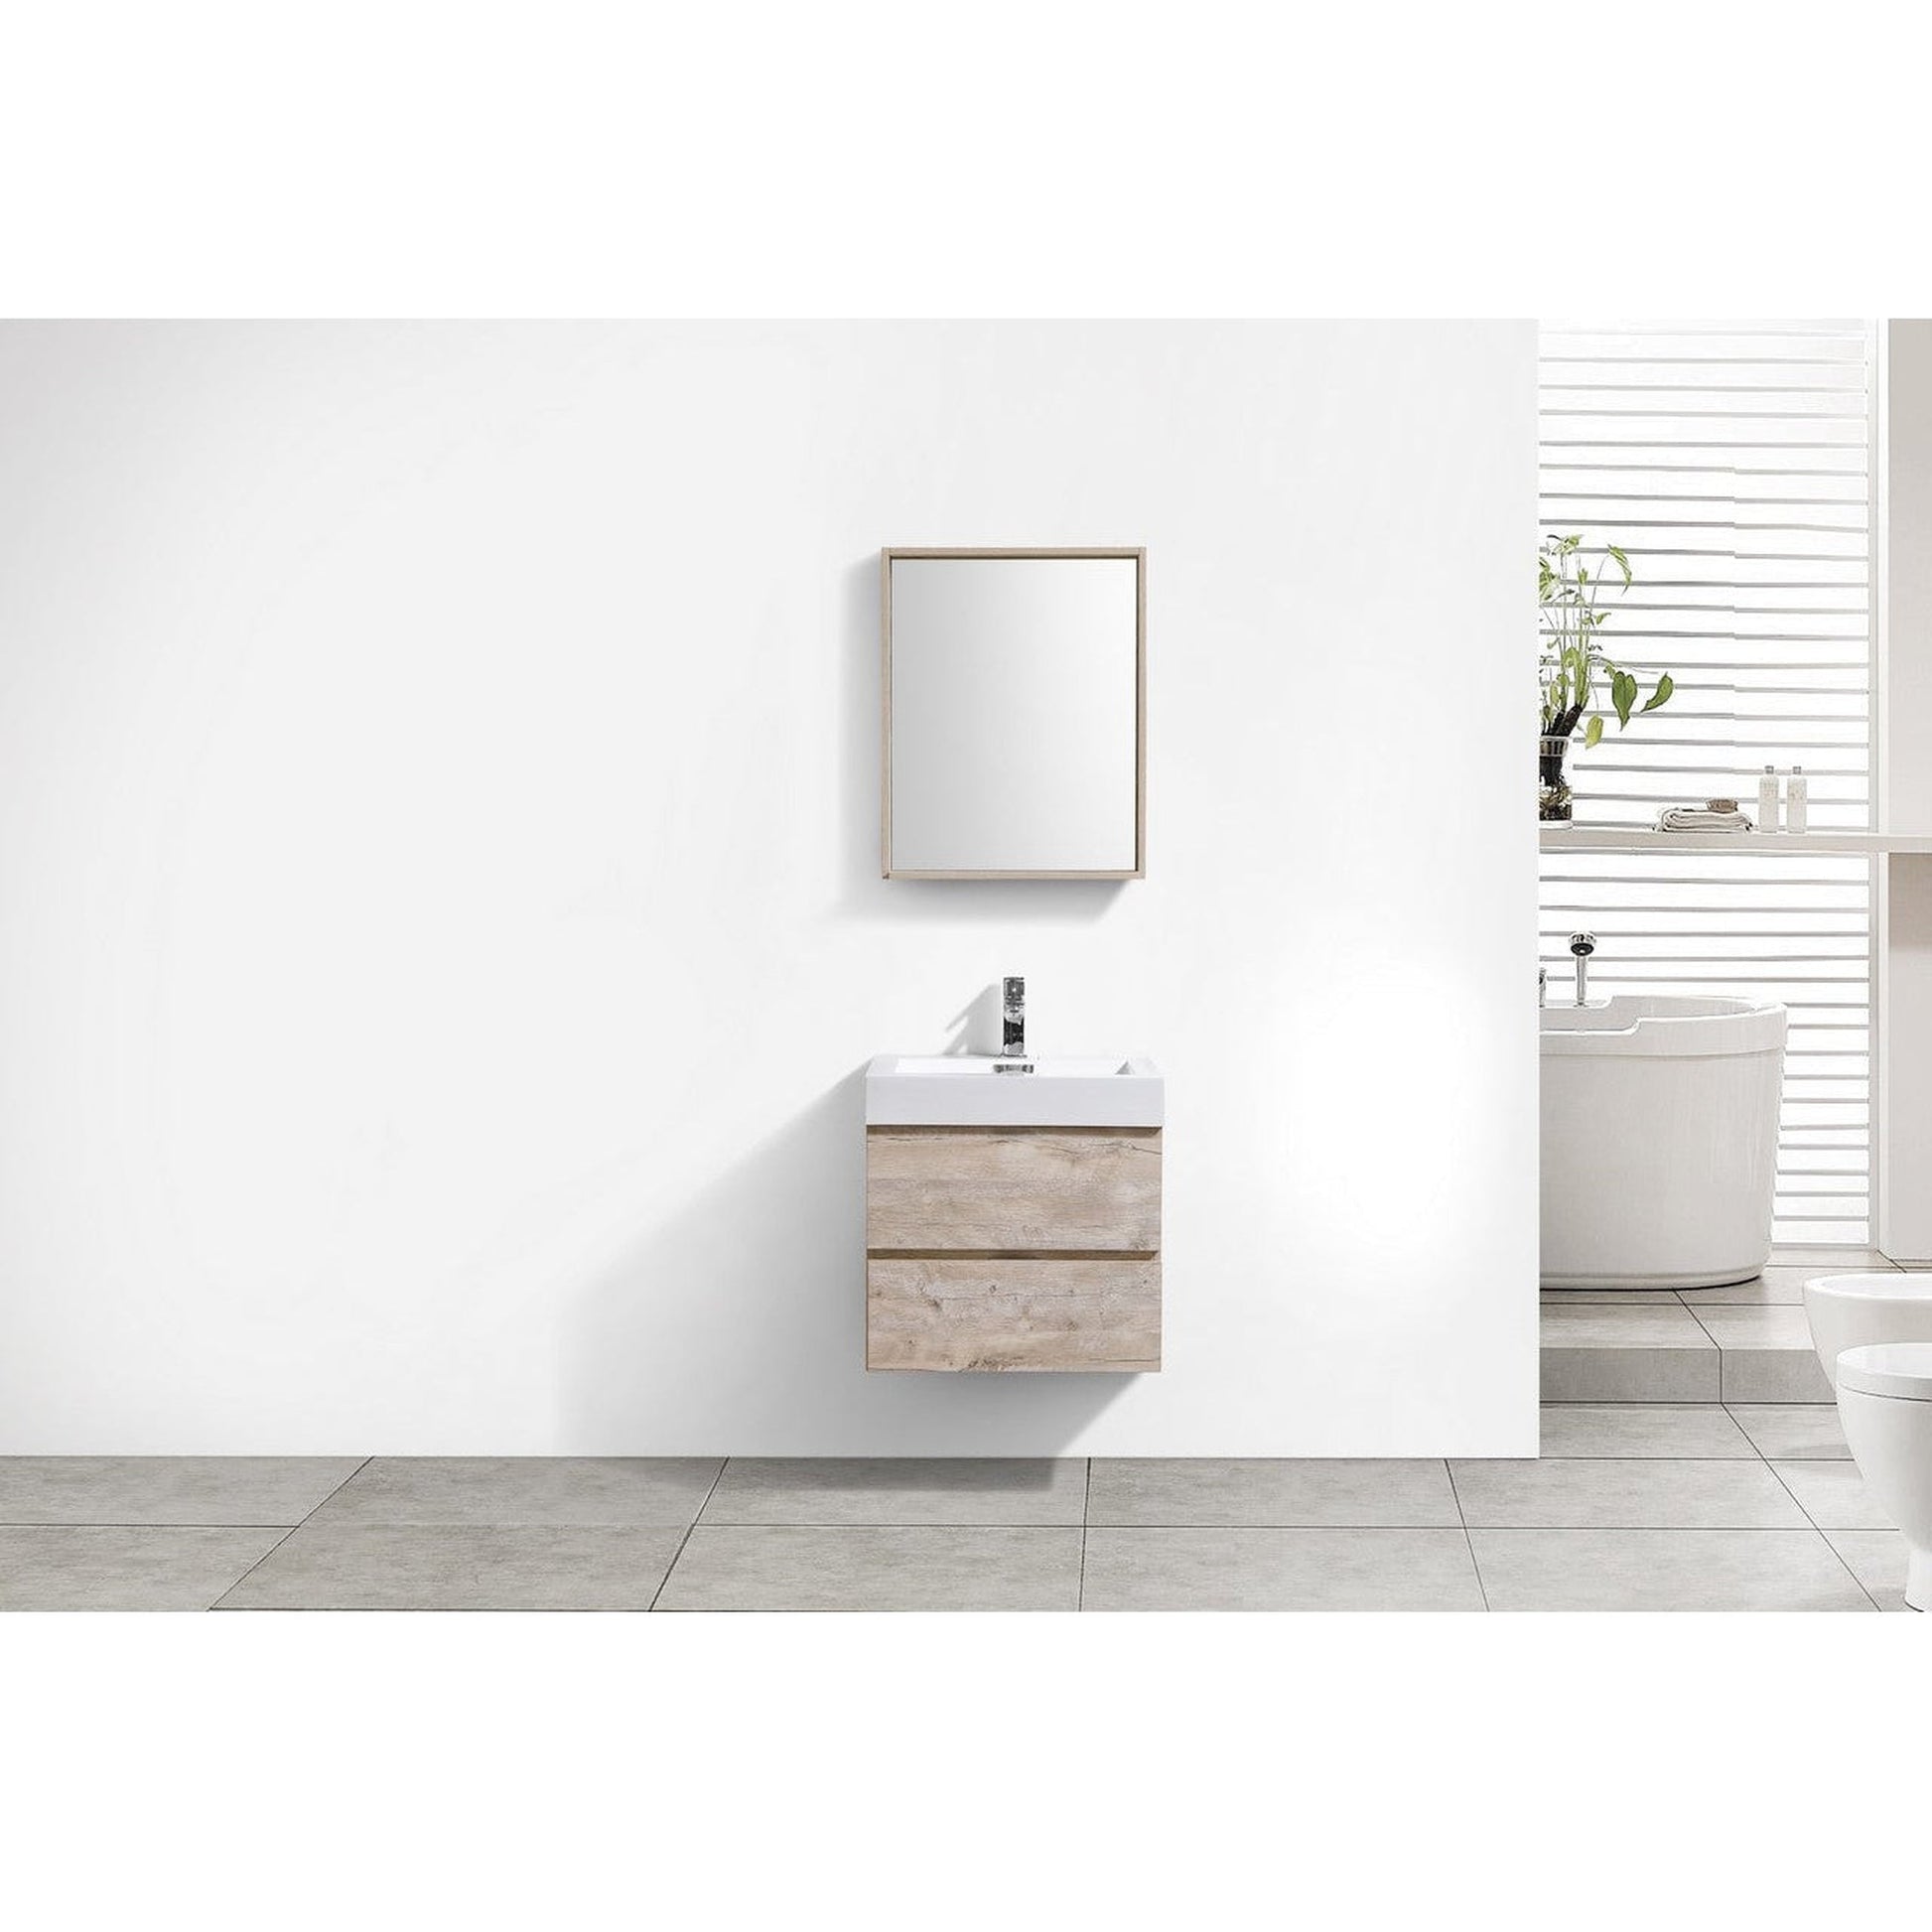 KubeBath Bliss 24" Nature Wood Wall-Mounted Modern Bathroom Vanity With Single Integrated Acrylic Sink With Overflow